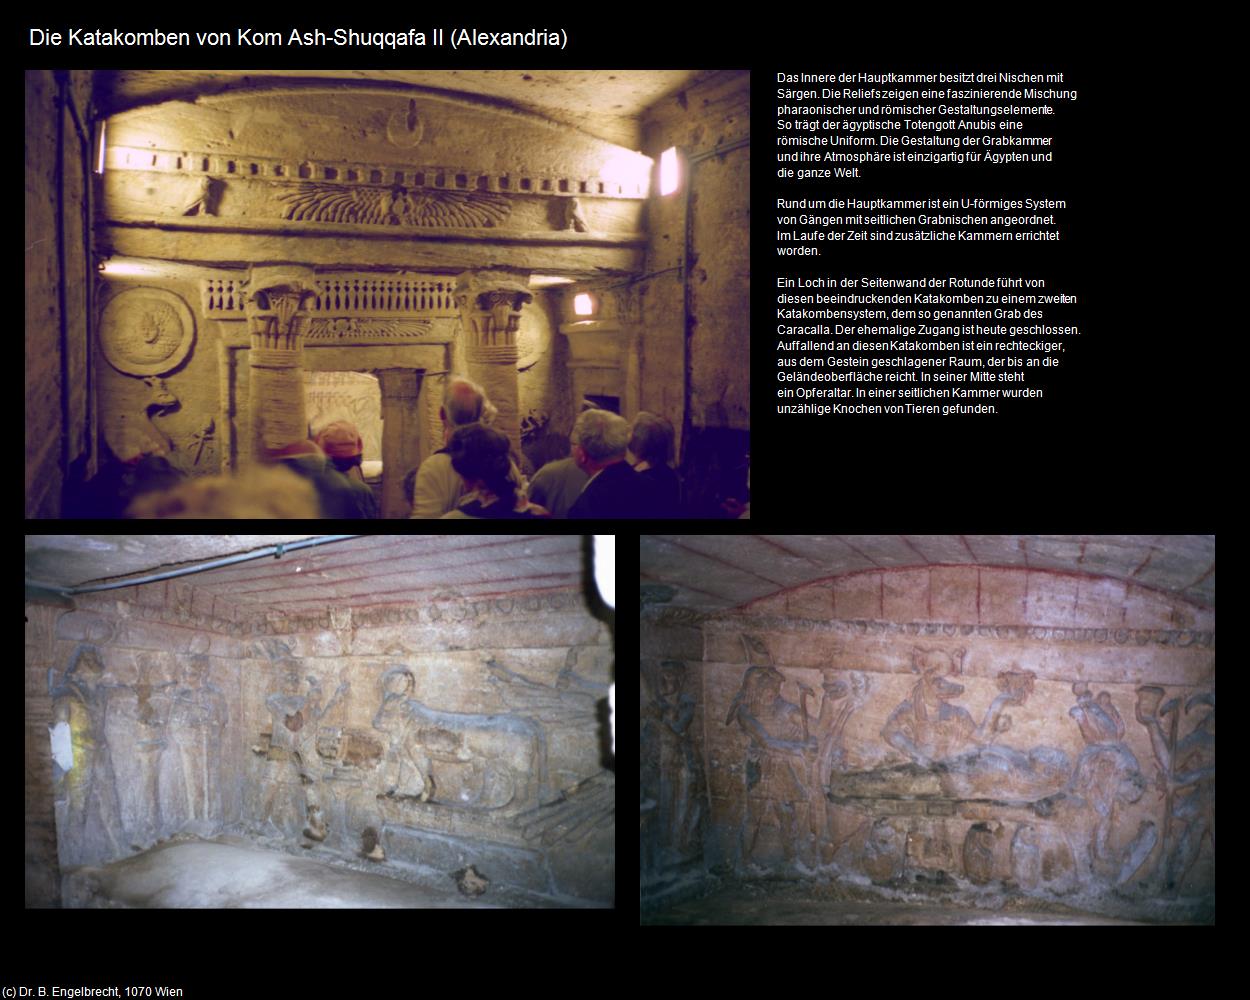 Die Katakomben von Kom Ash-Shuqqafa II (Alexandria, Nil-Delta) in Kulturatlas-ÄGYPTEN